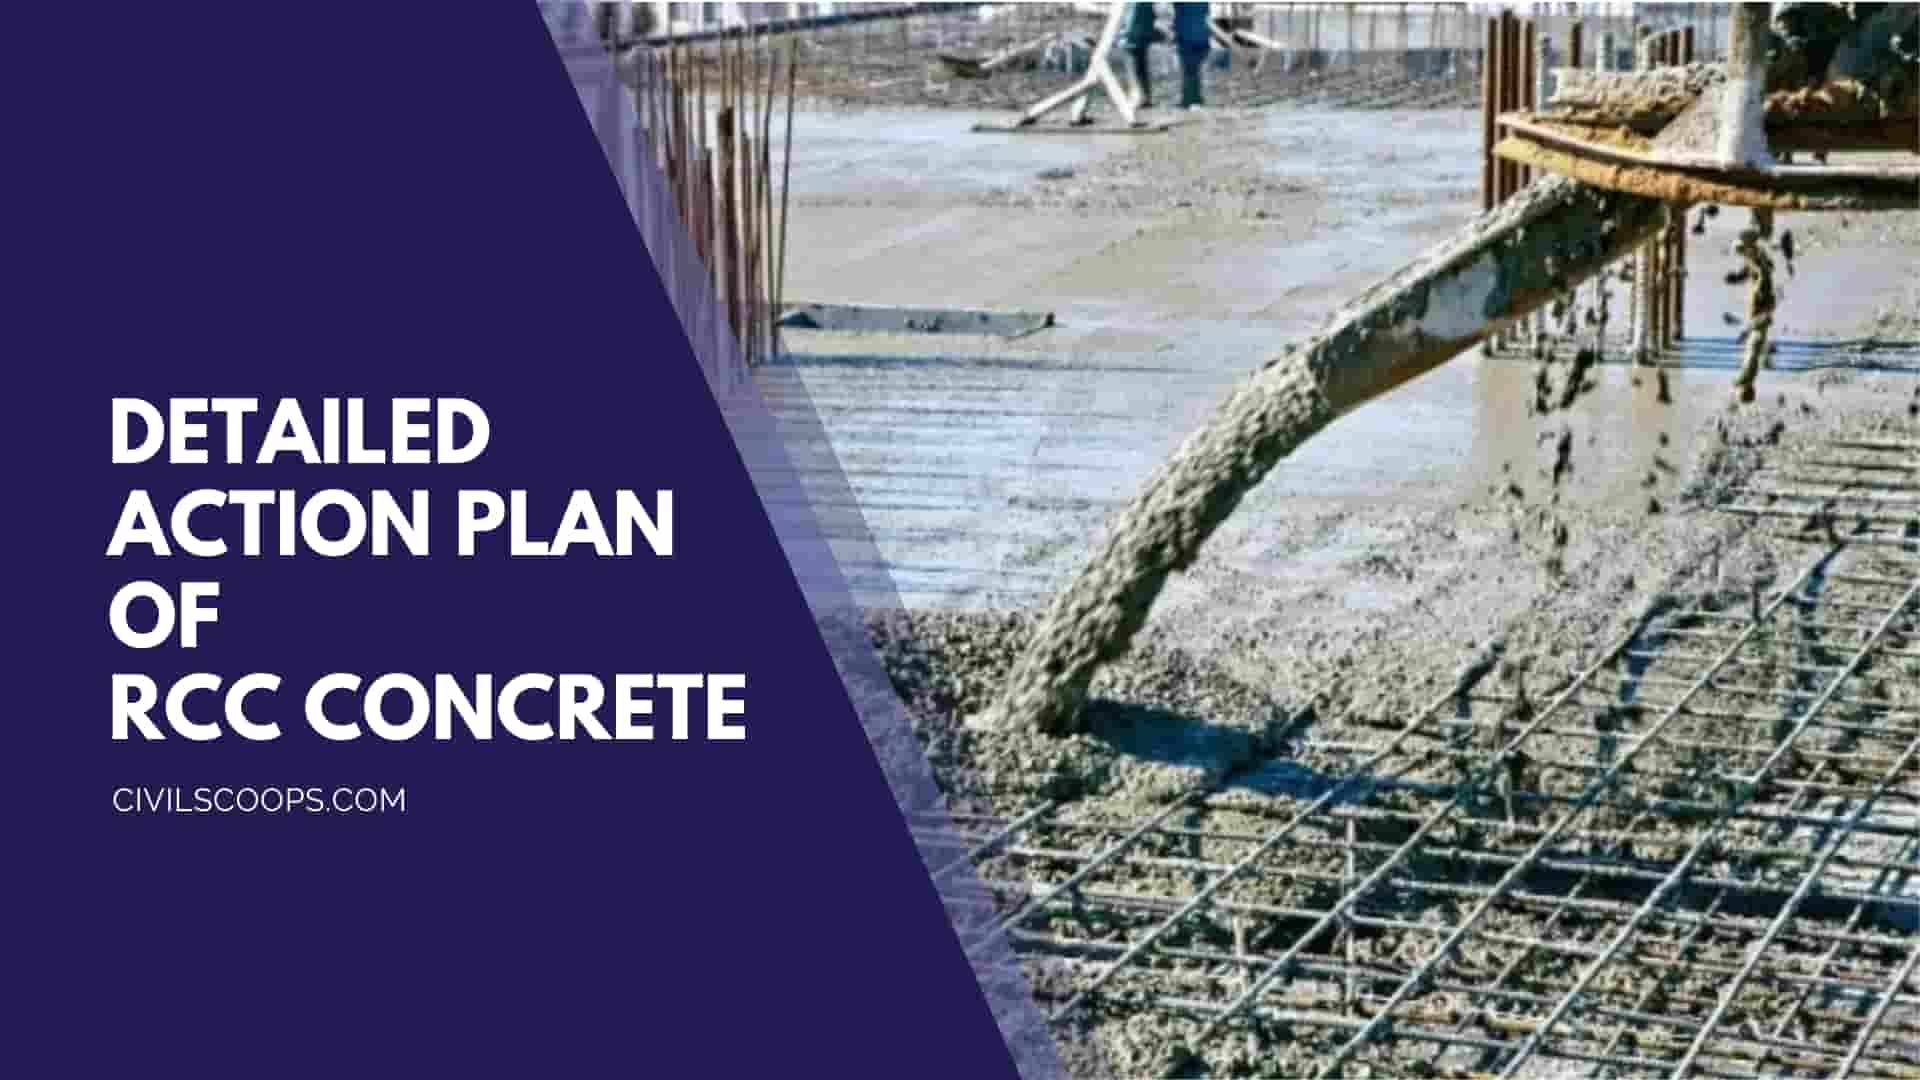 Detailed Action Plan Of rcc concrete